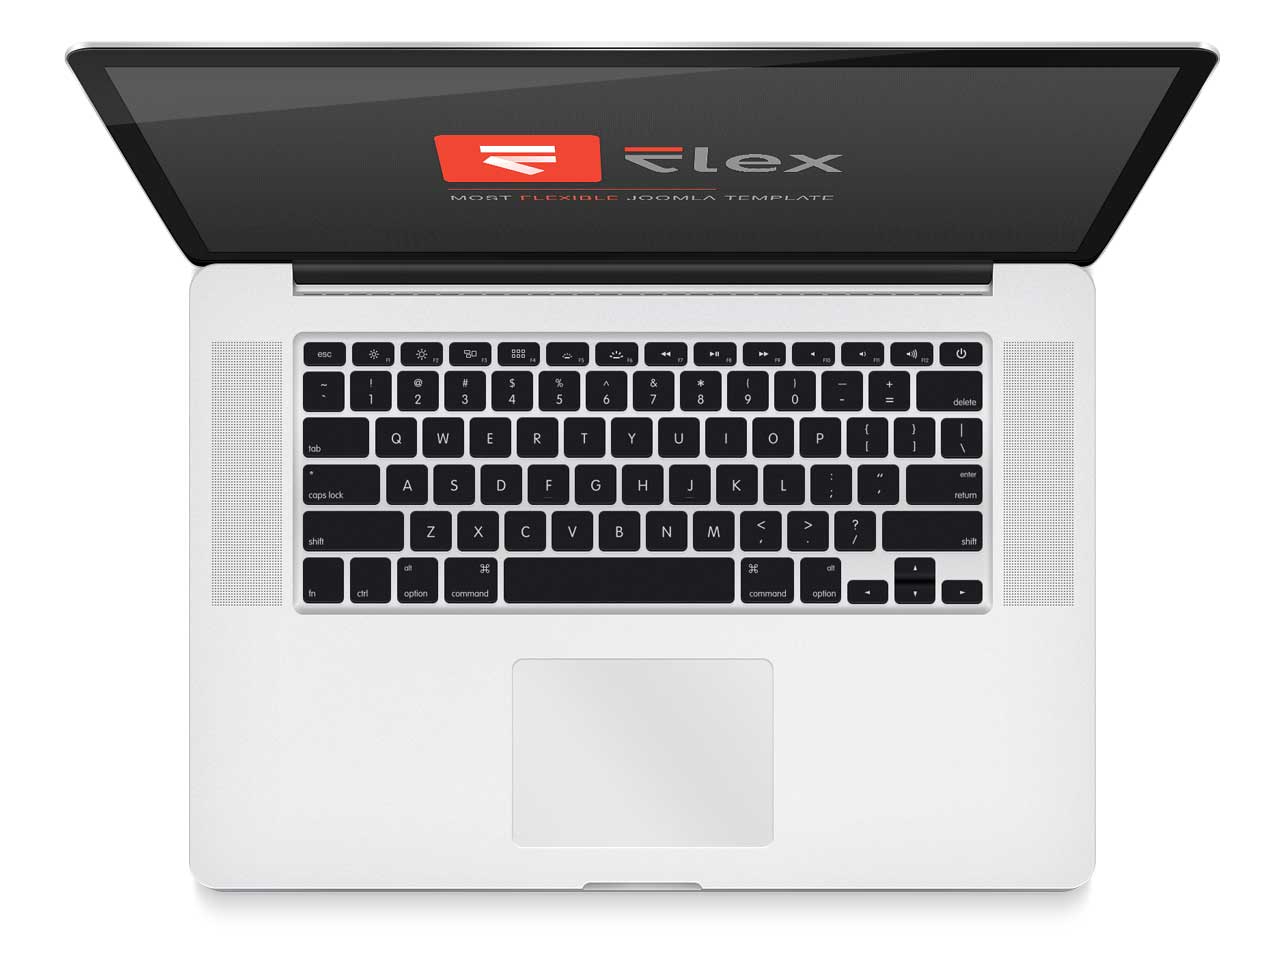 flex-macbook-top-view.jpg - 58,37 kB